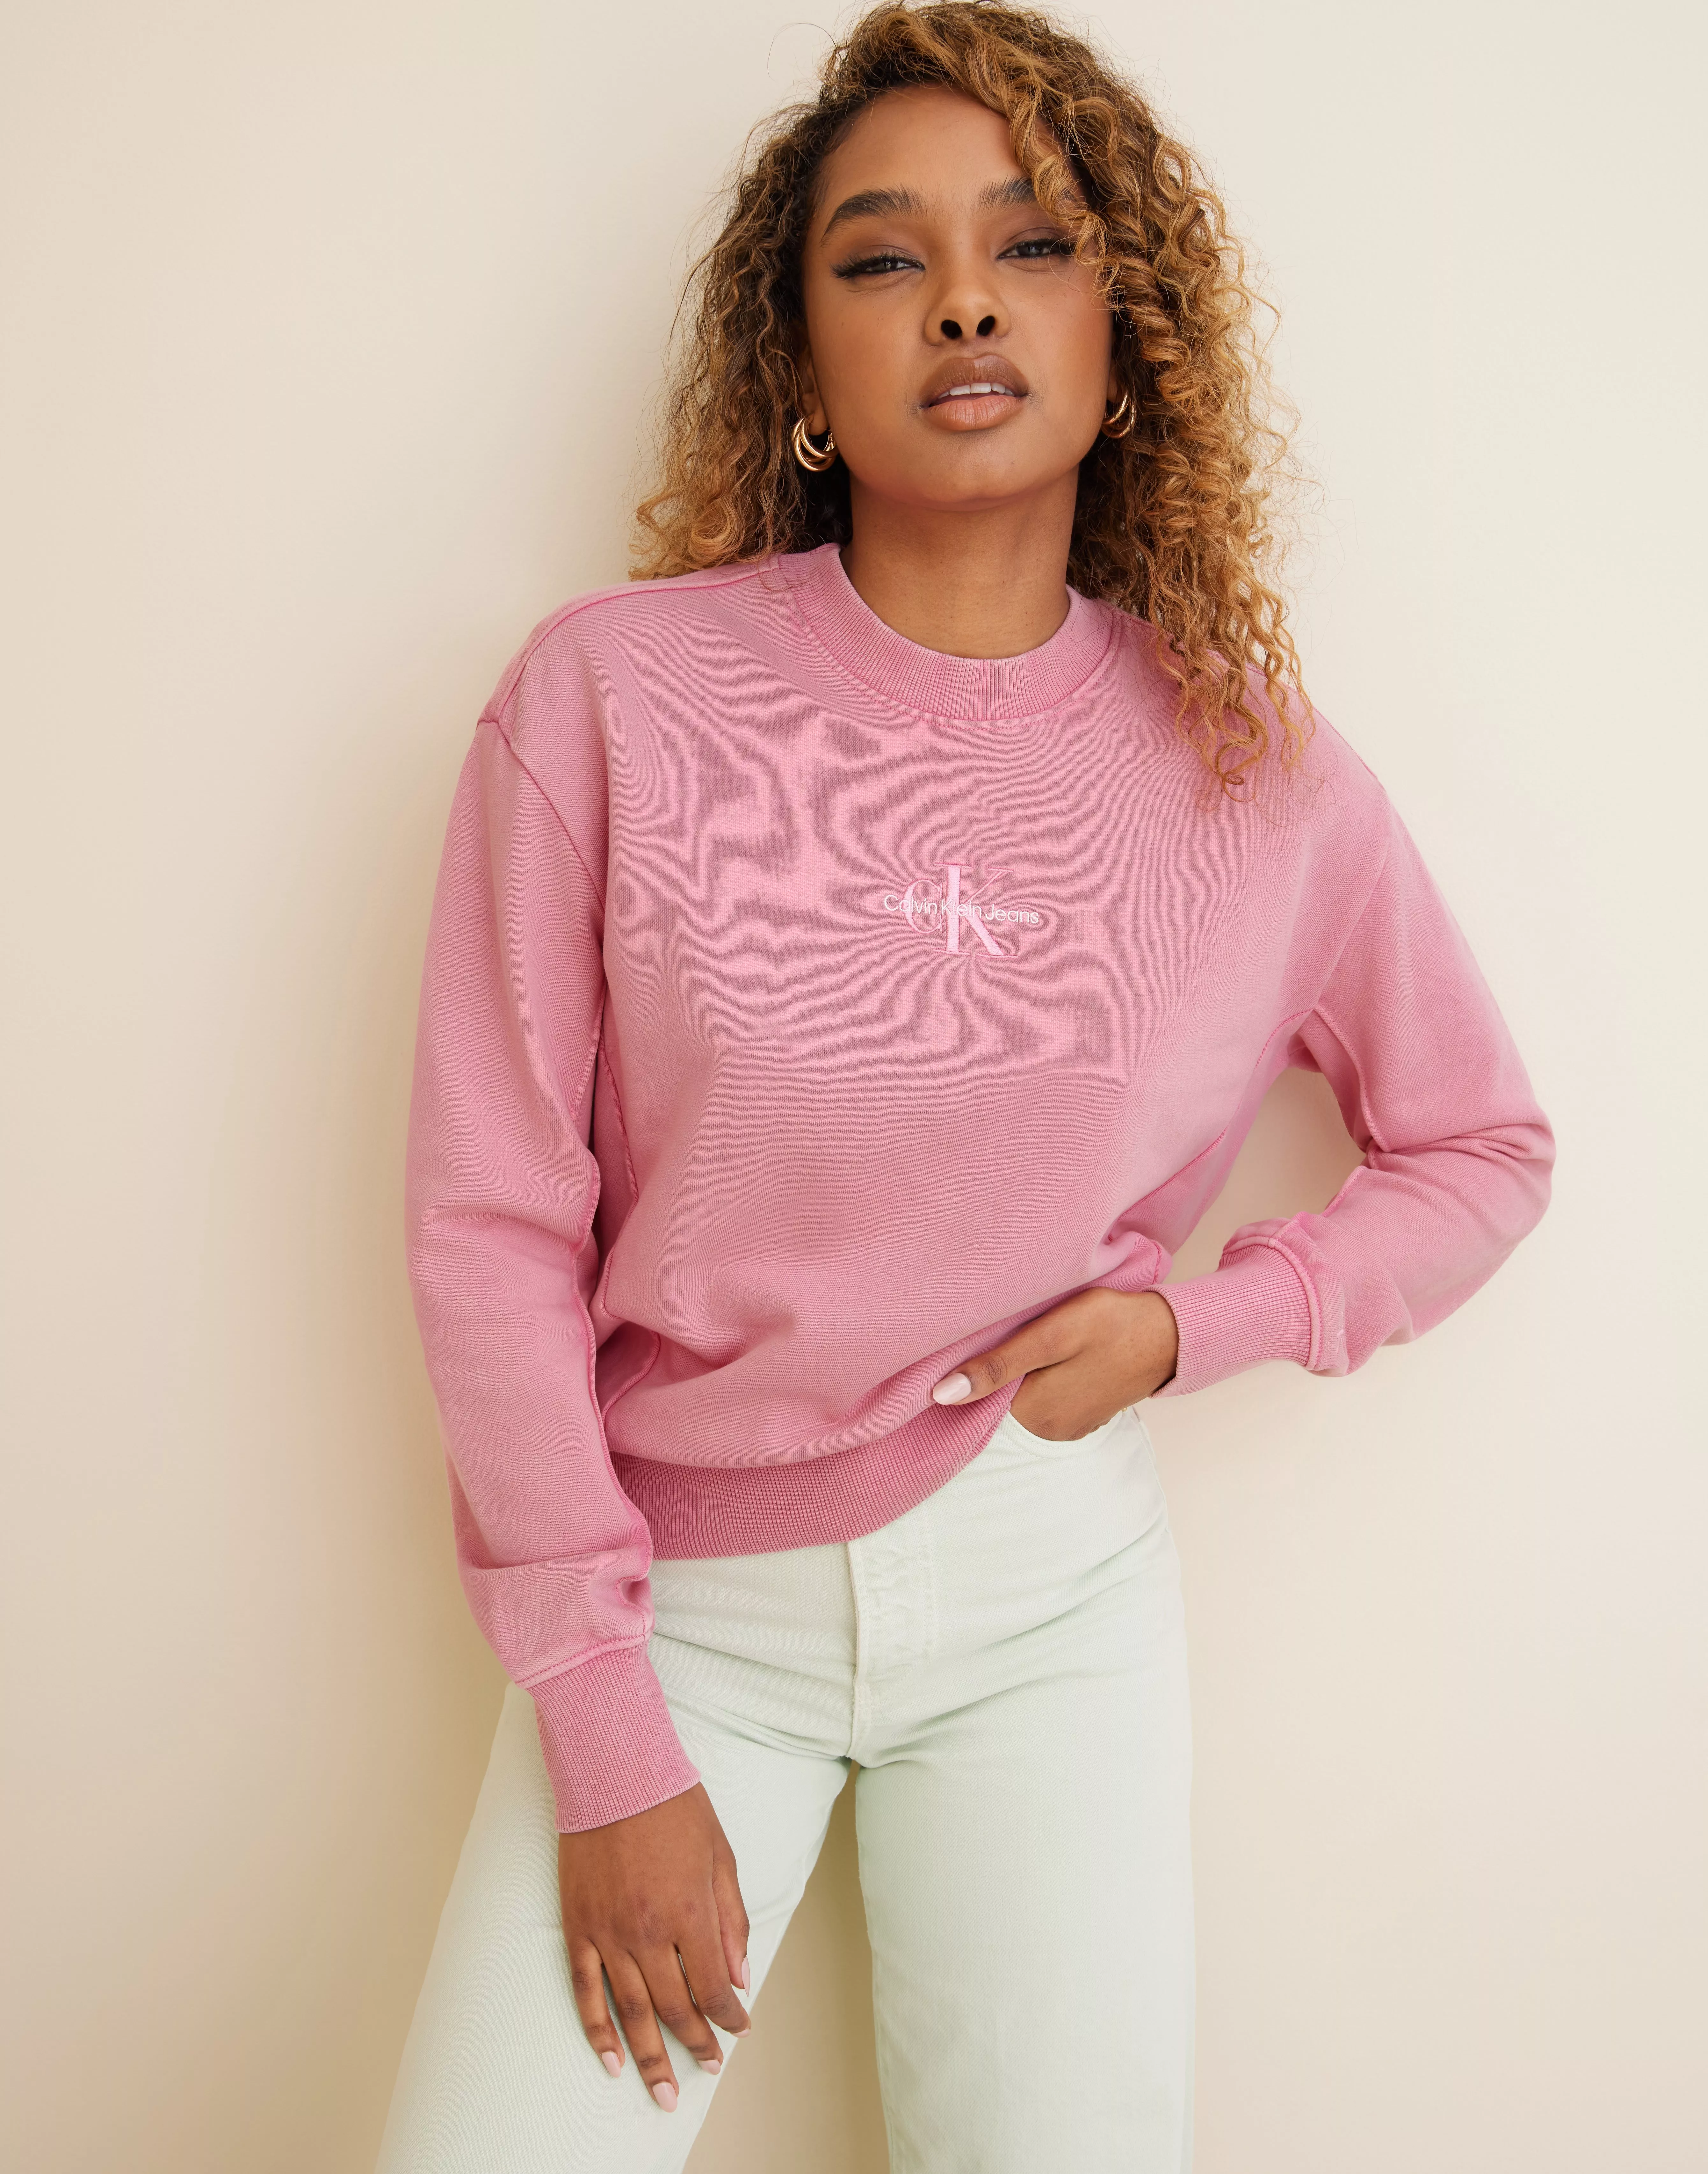 Klein - Jeans Pink LOGO NECK CREW Buy WASHED Calvin MONOGRAM